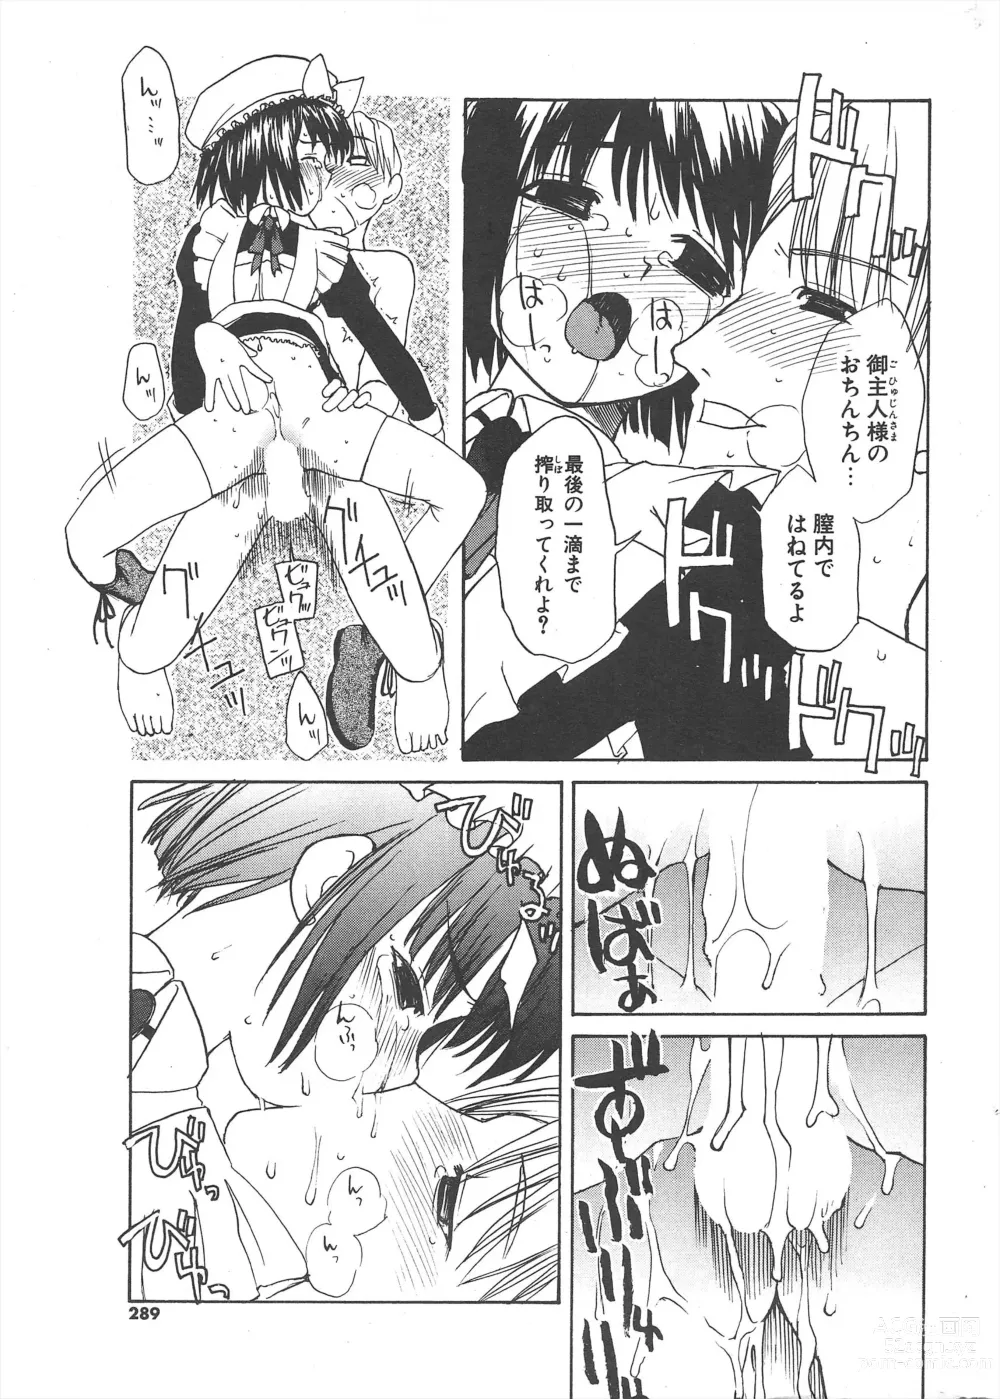 Page 289 of manga Comic Potpourri Club 2005-06